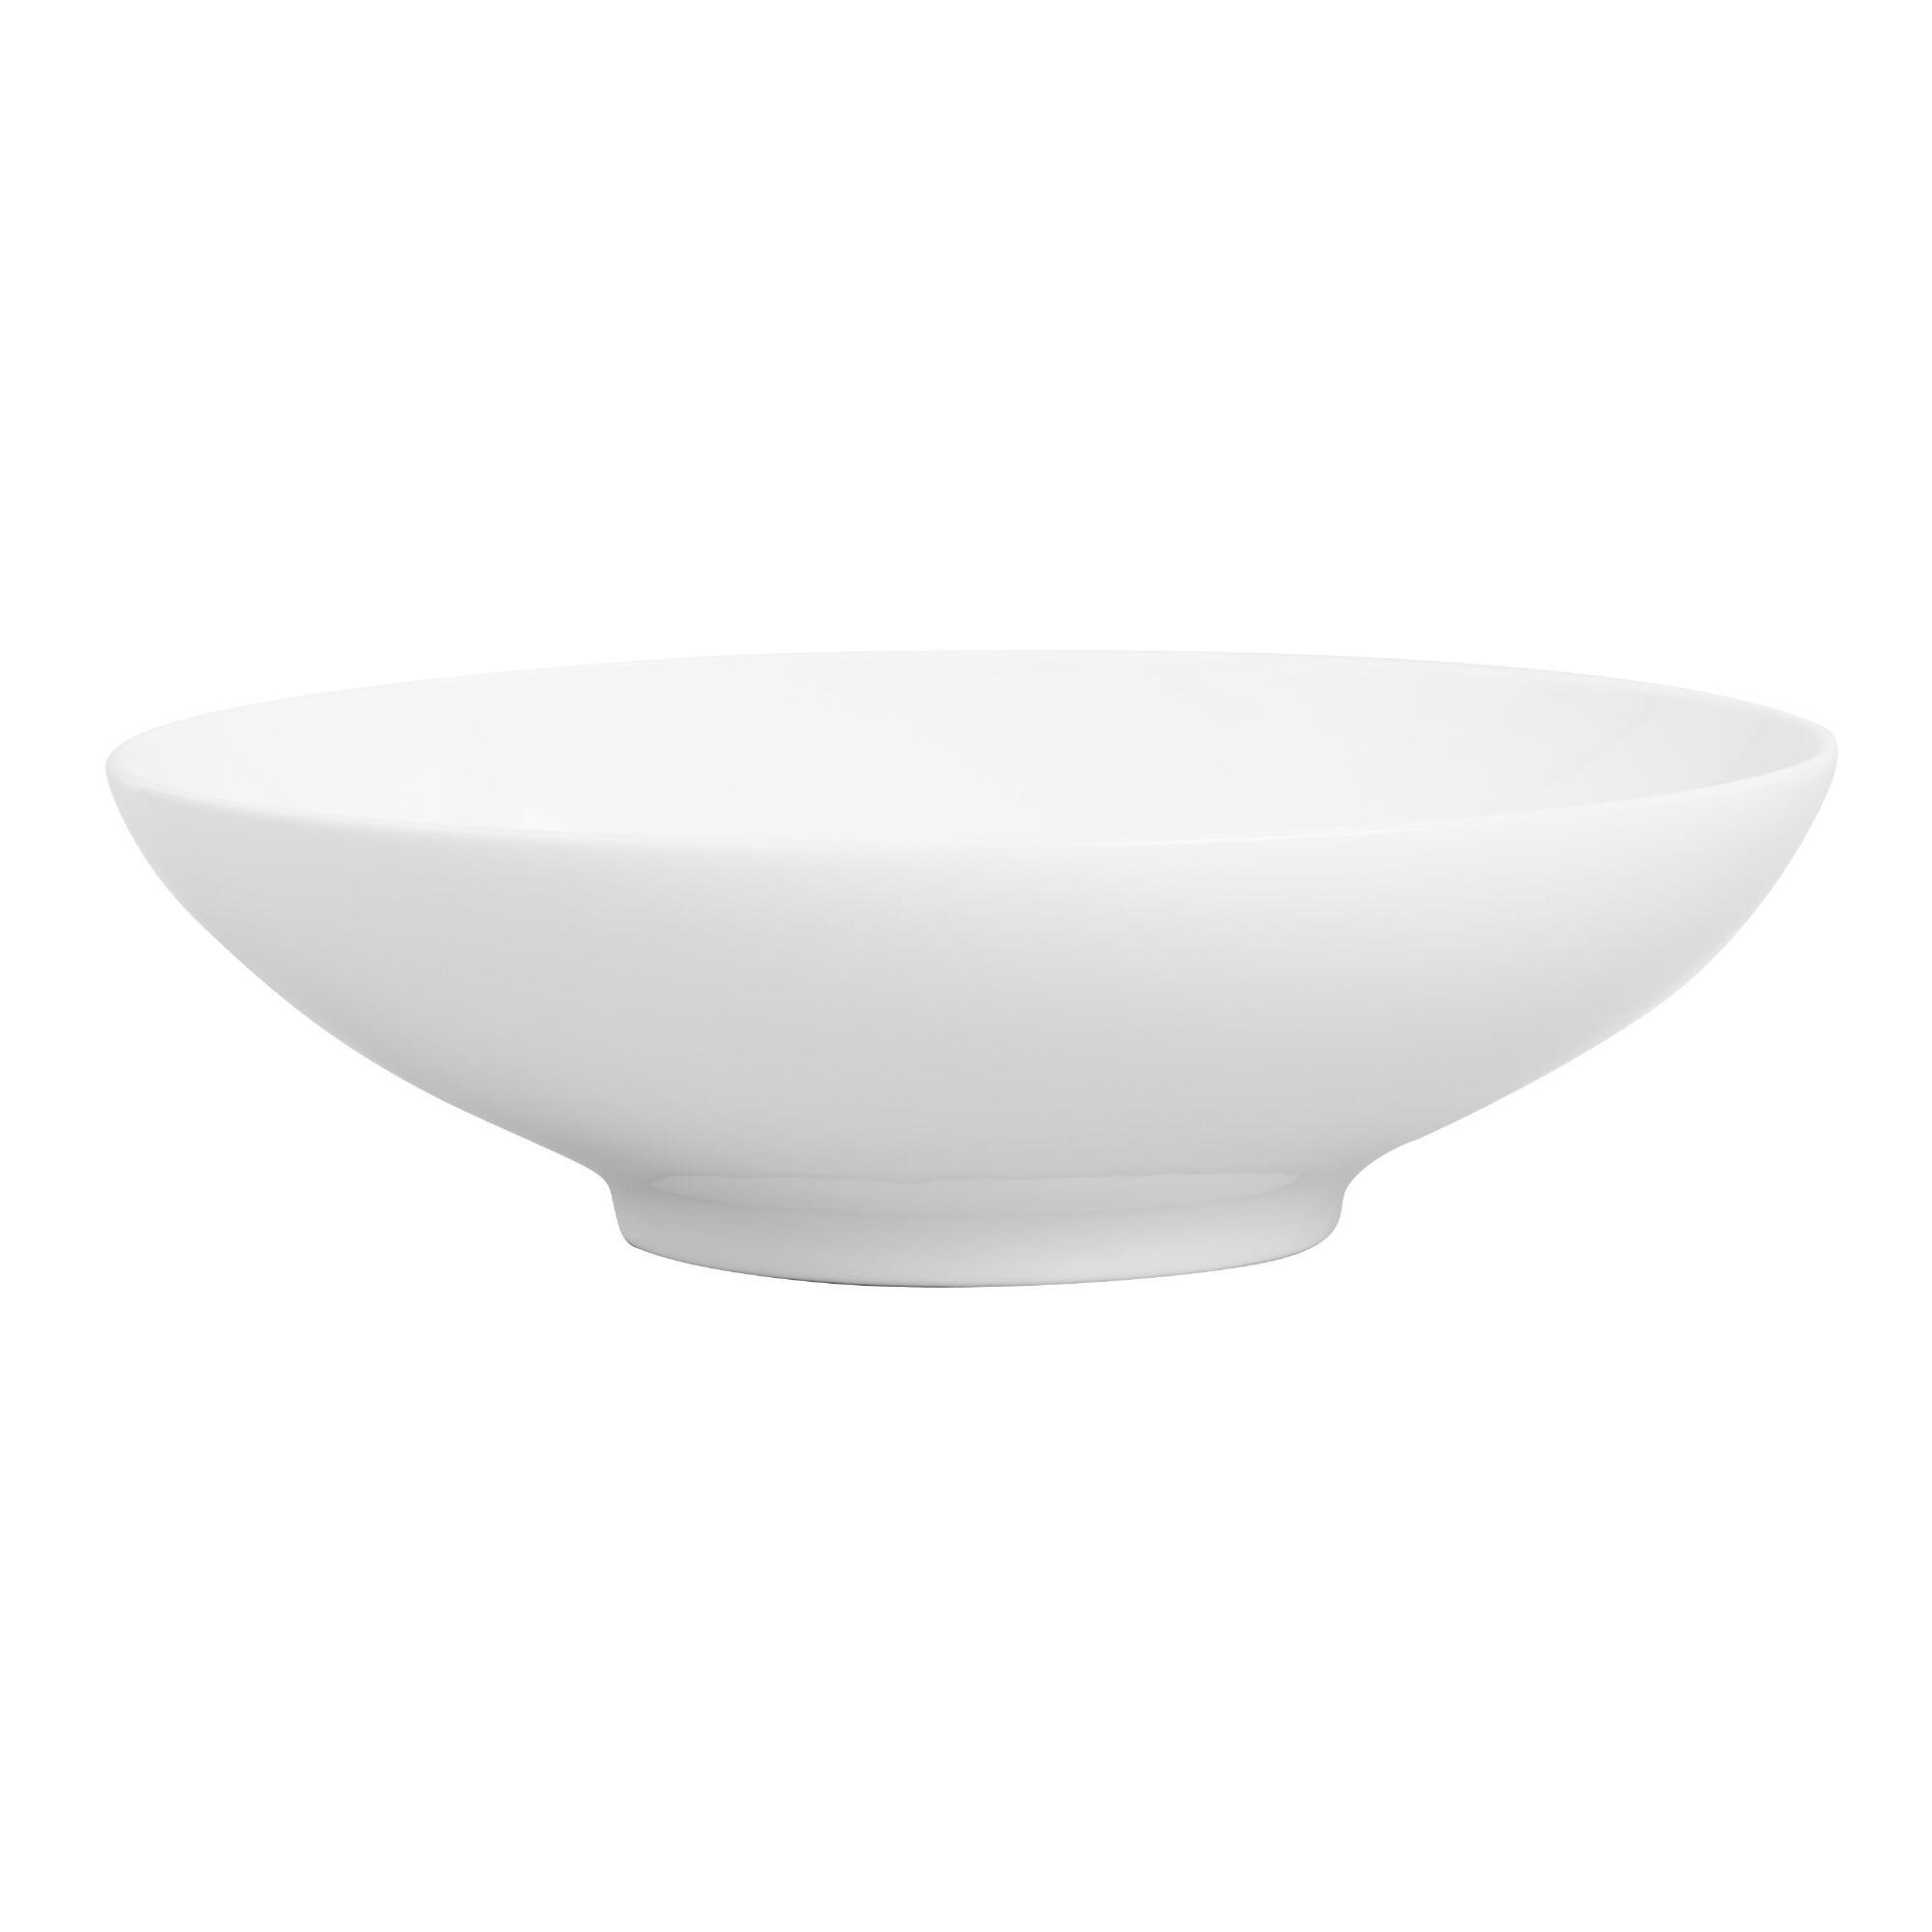 White Porcelain Flared Rim Coupe Serving Bowl by World Market